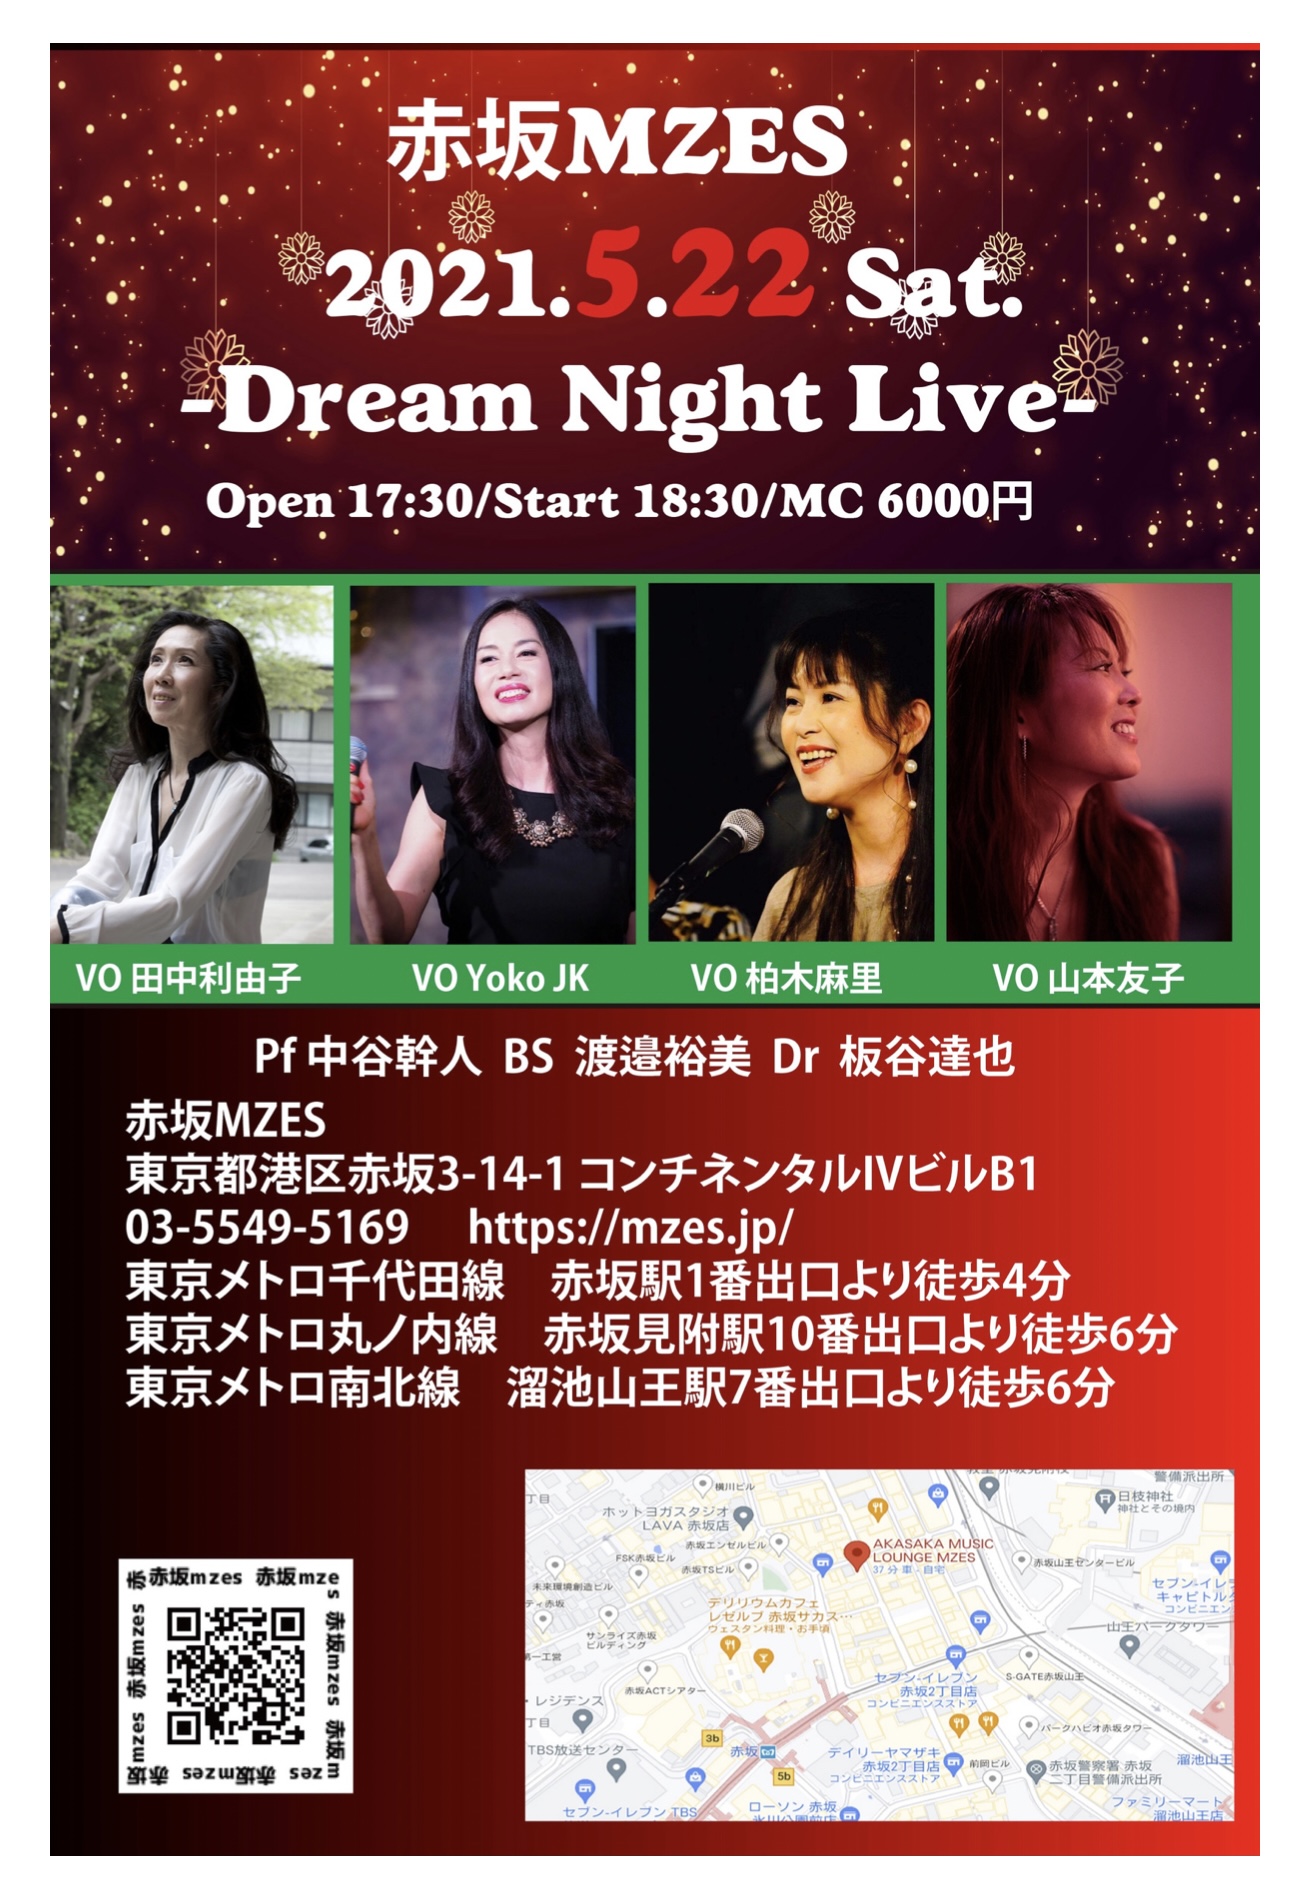 Dream Night Live